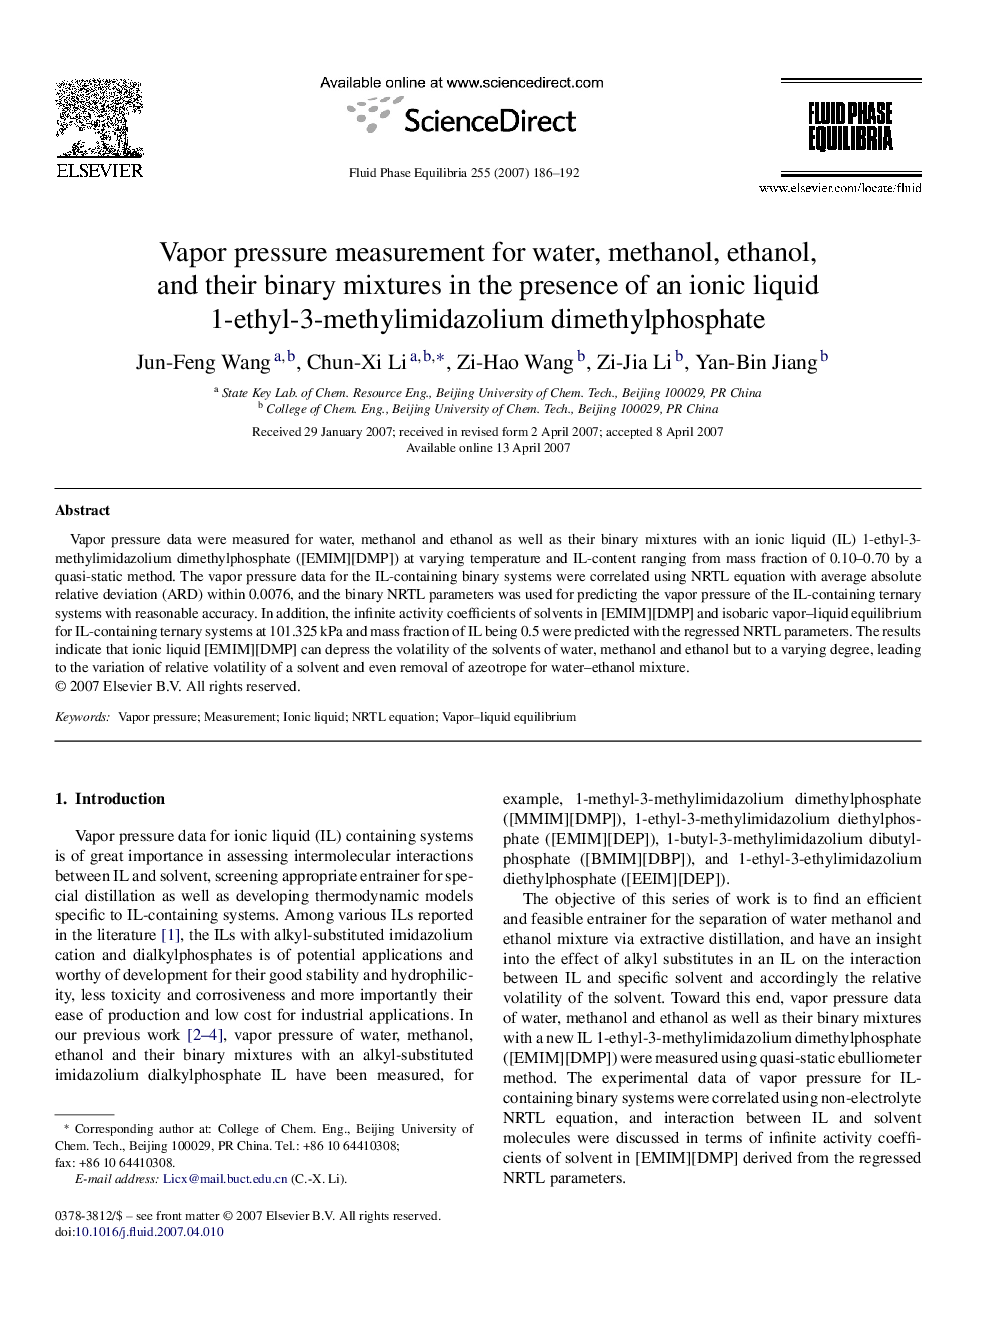 Vapor pressure measurement for water, methanol, ethanol, and their binary mixtures in the presence of an ionic liquid 1-ethyl-3-methylimidazolium dimethylphosphate